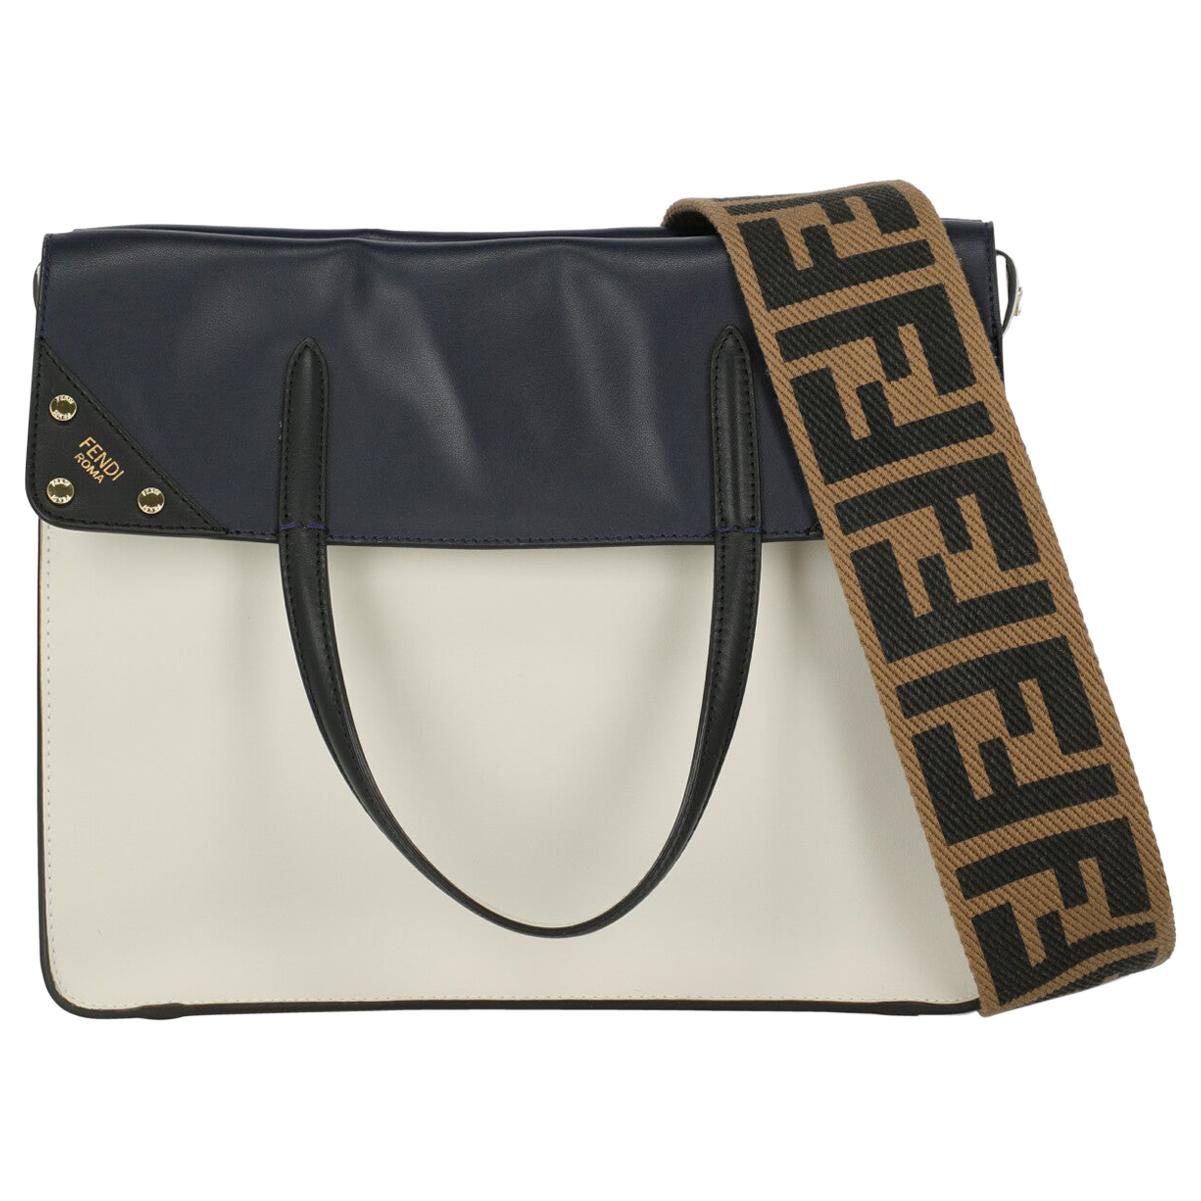 Fendi Women's Tote Bag Black/Navy/White Leather For Sale